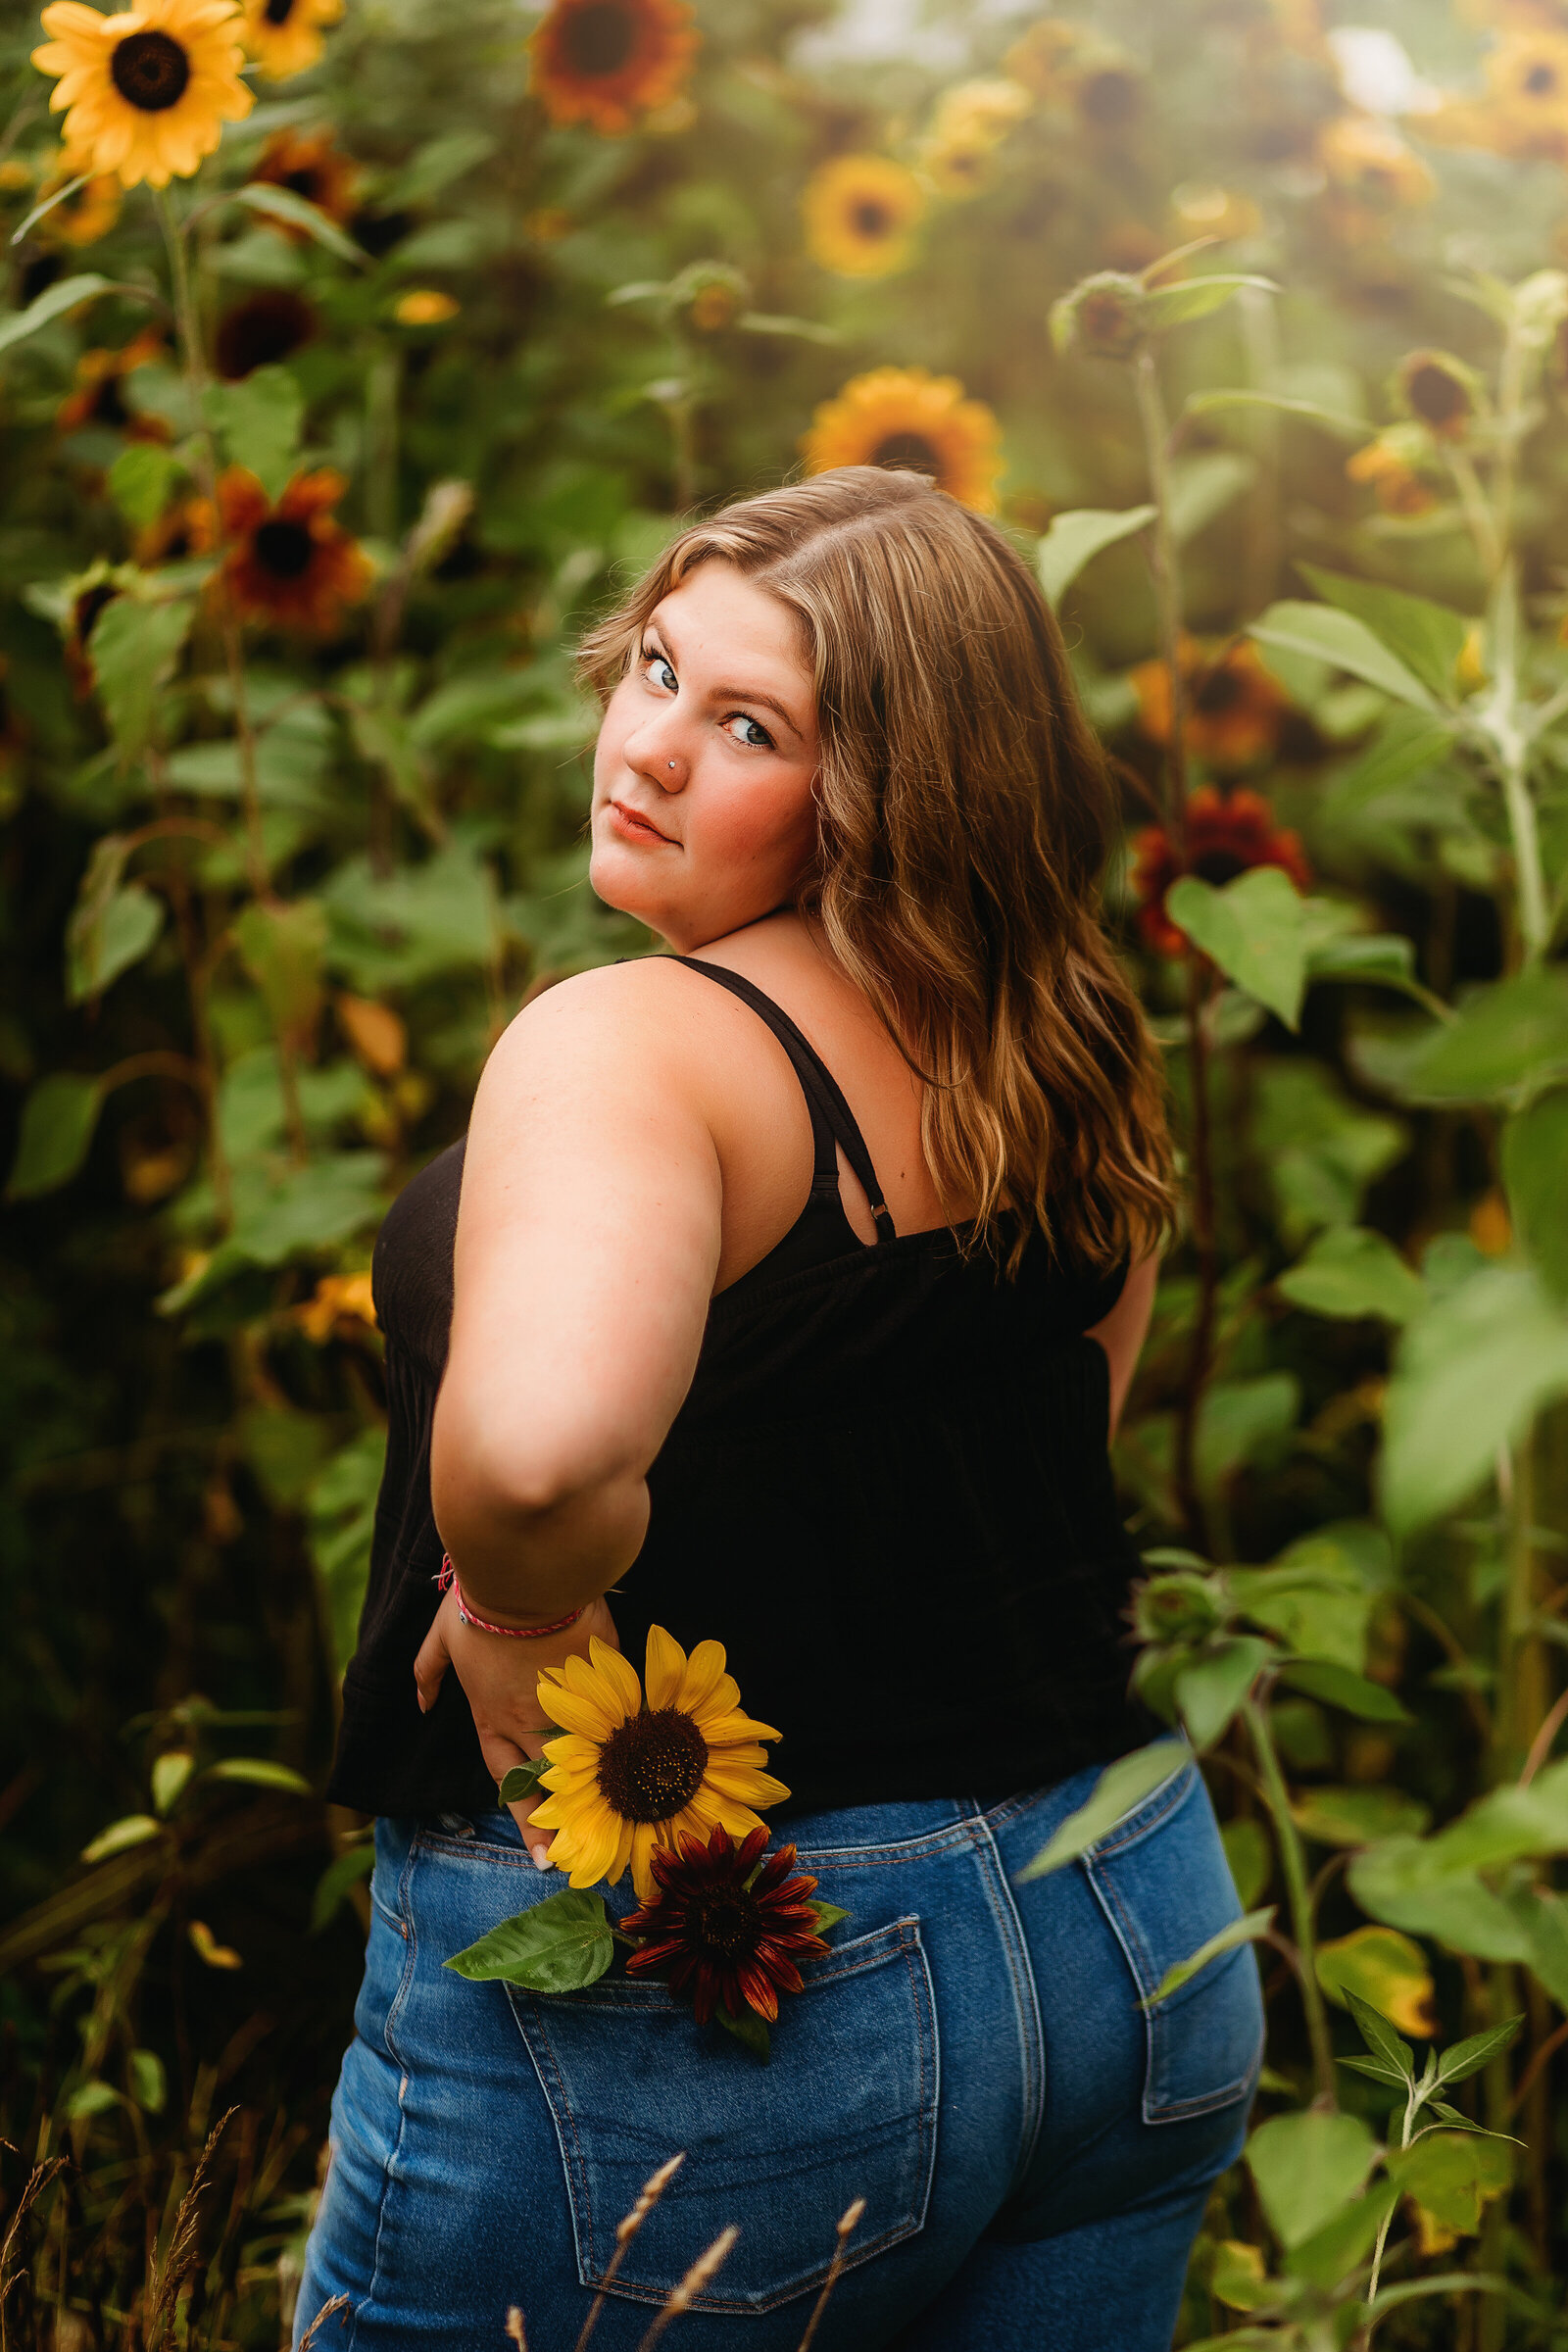 senior pictures in sunflowers. ohio senior photographer. canal fulton ohio photographer.